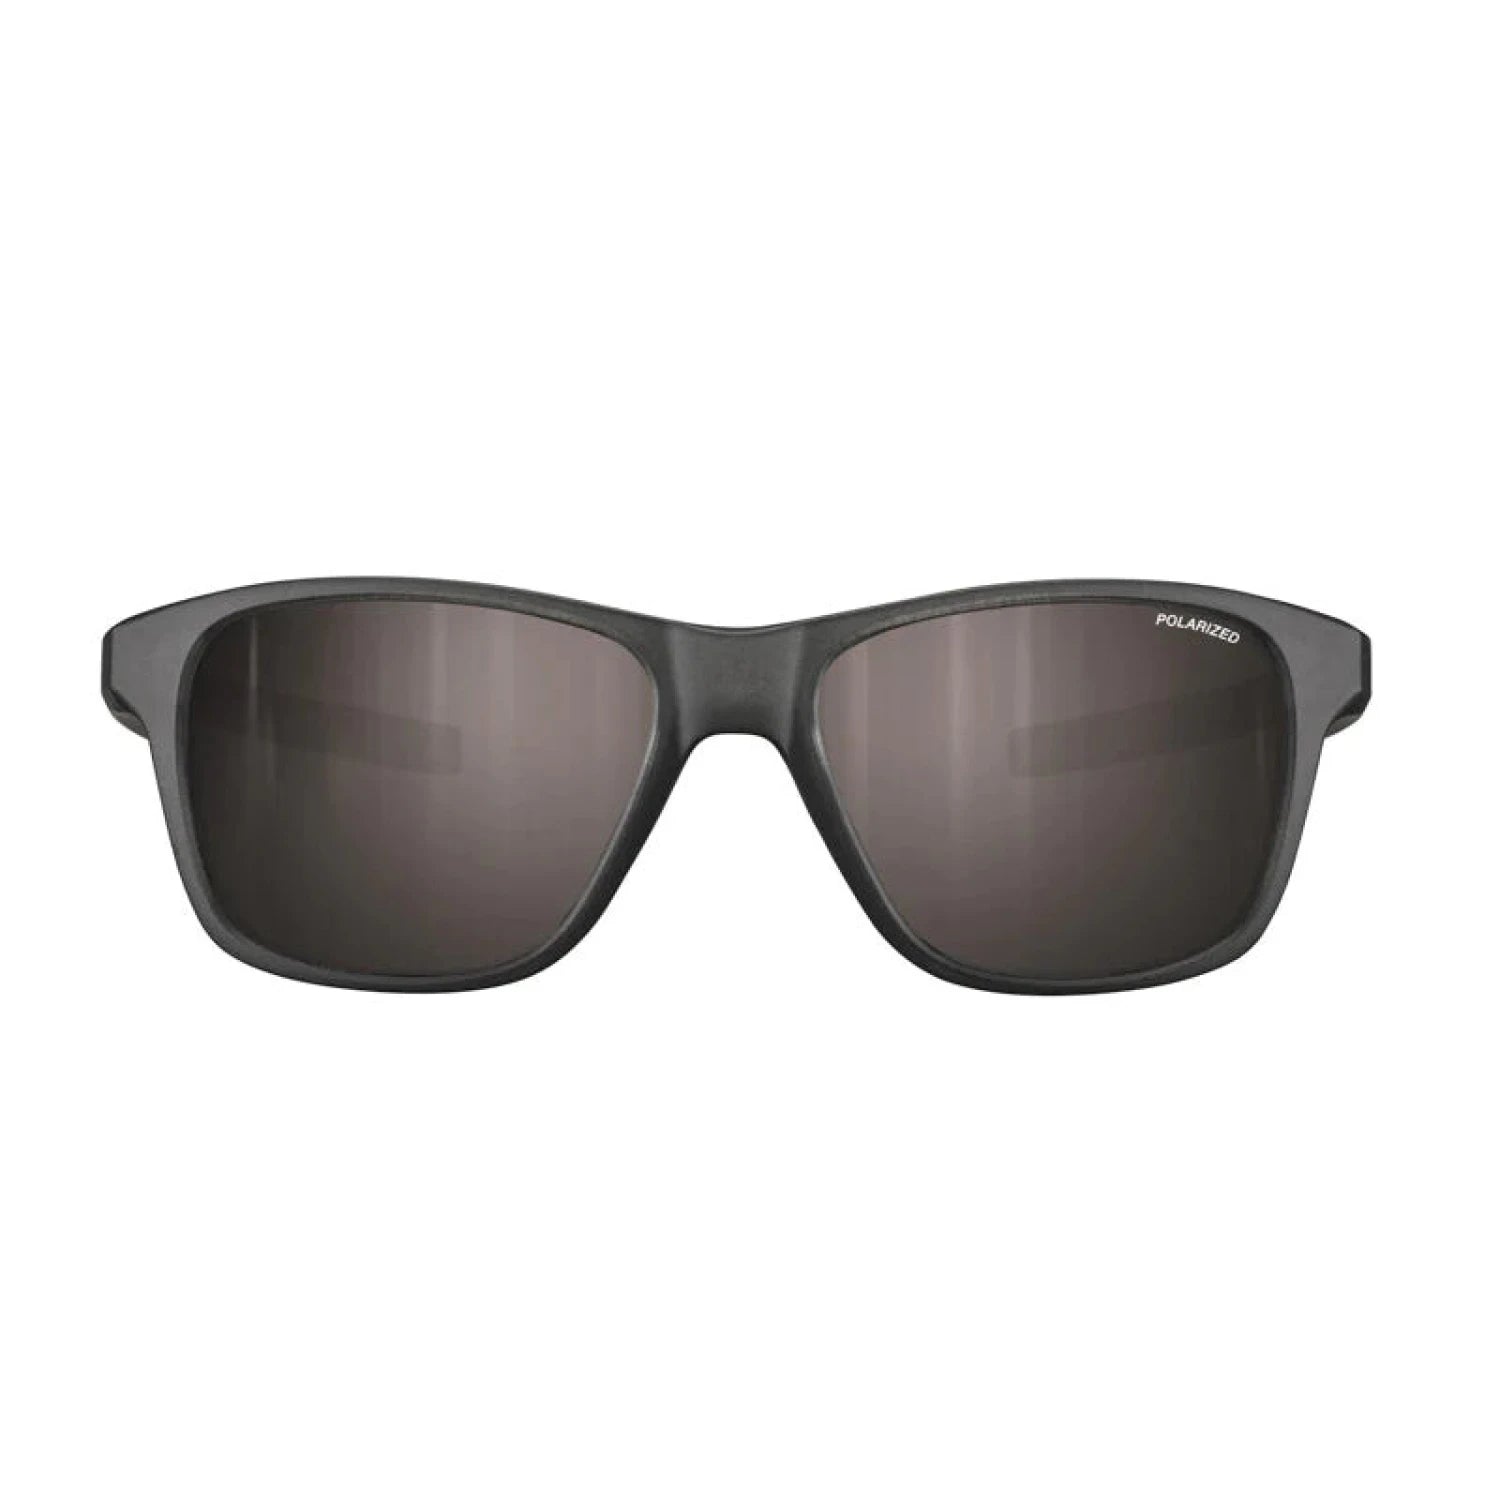 Julbo Cruiser Kids Sunglasses shown in Translucent Matte Black color option. Front view.